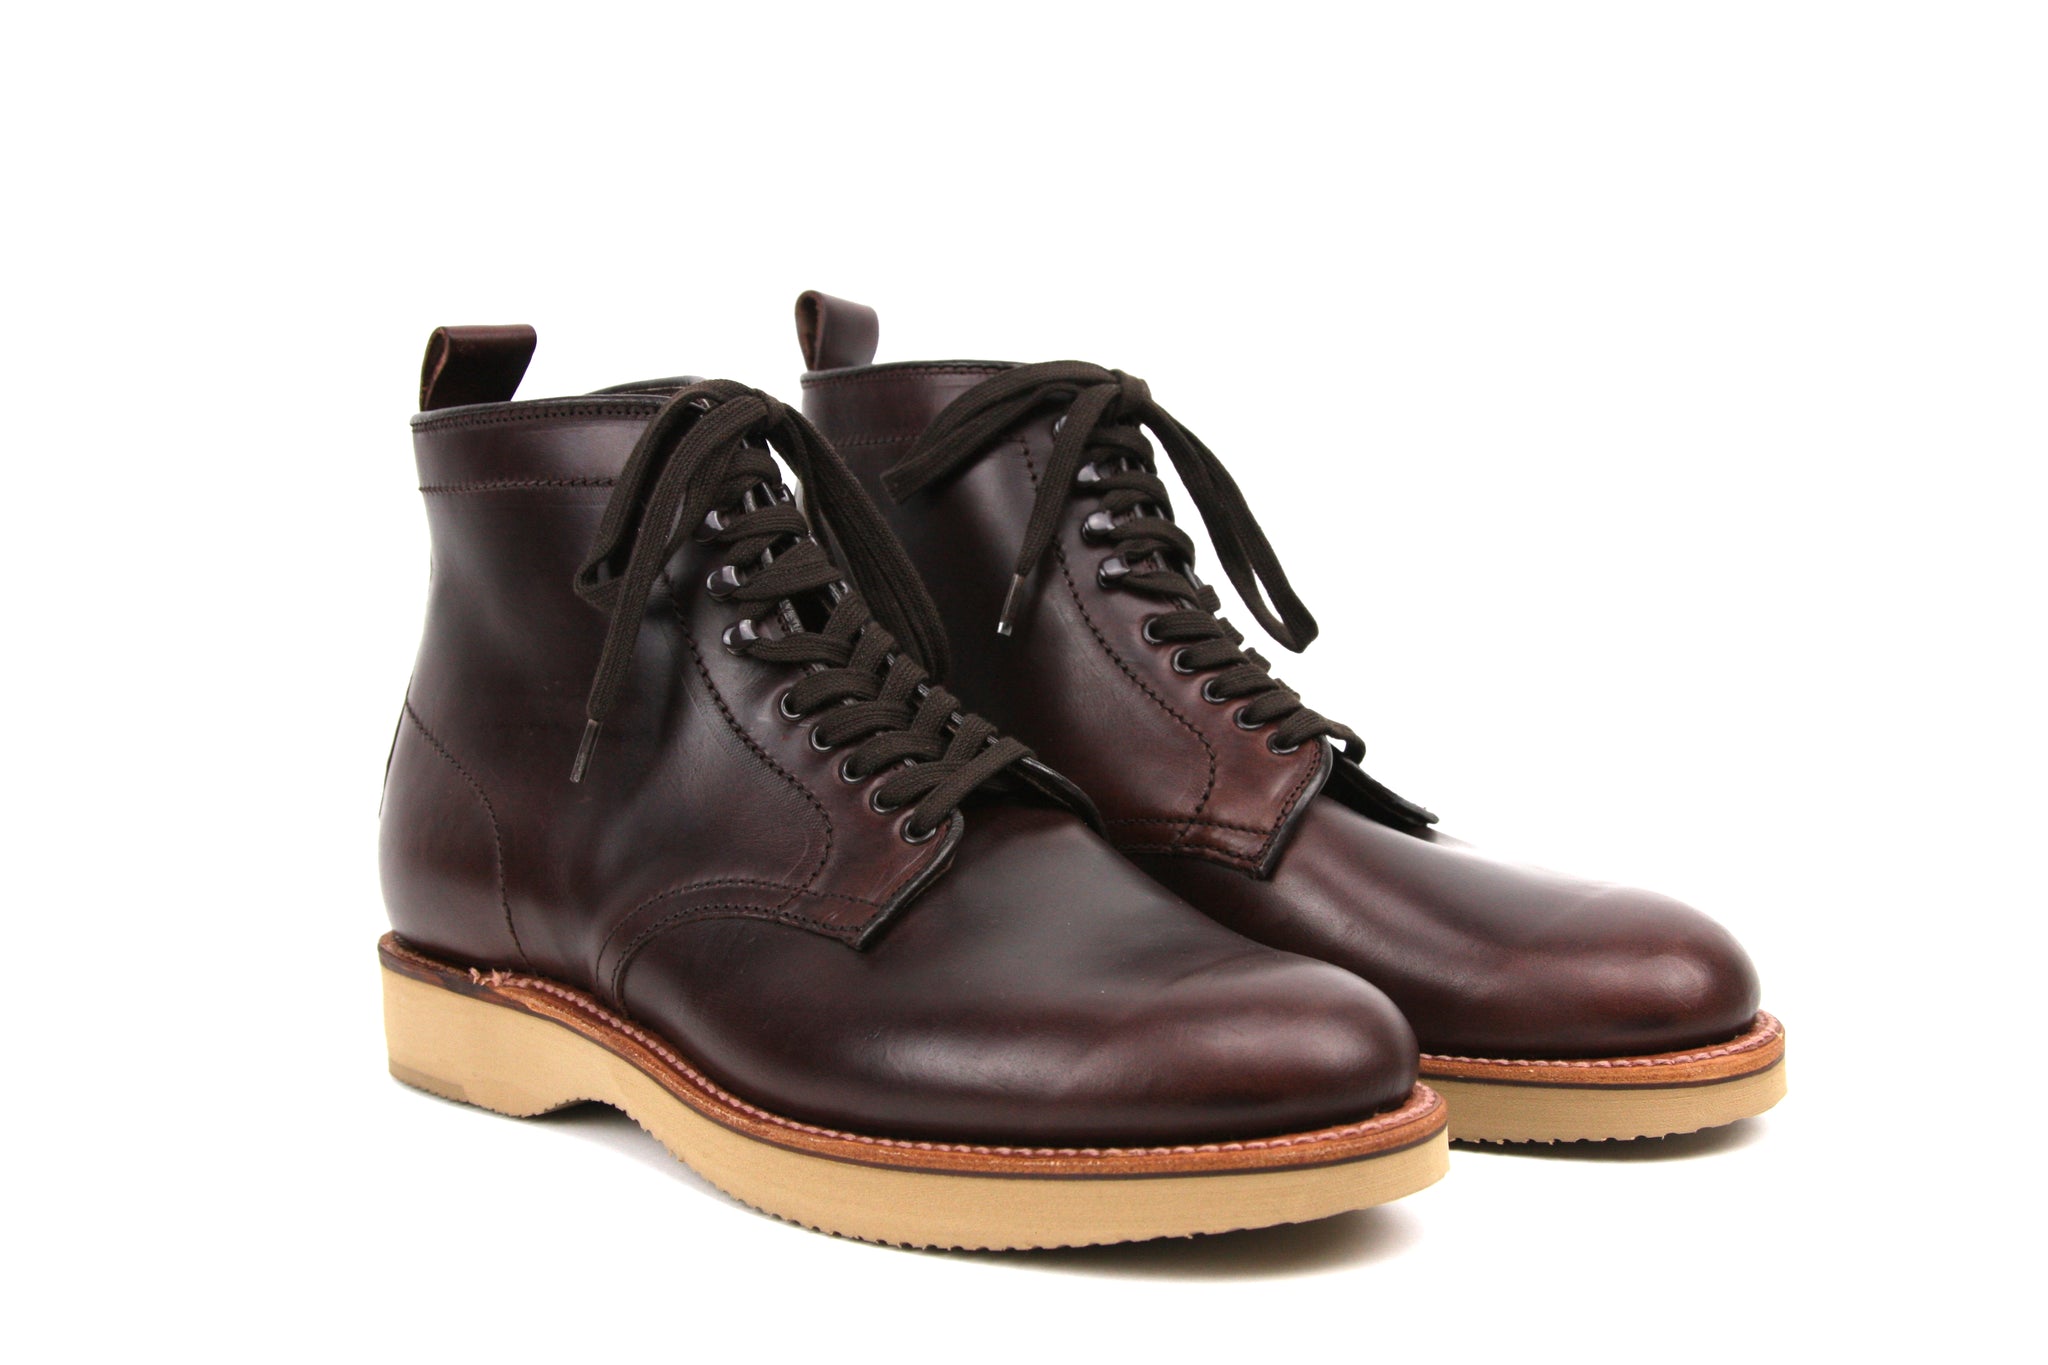 Alden Plain Toe Boot Dark Brown Chromexcel Leather on Wedge Sole